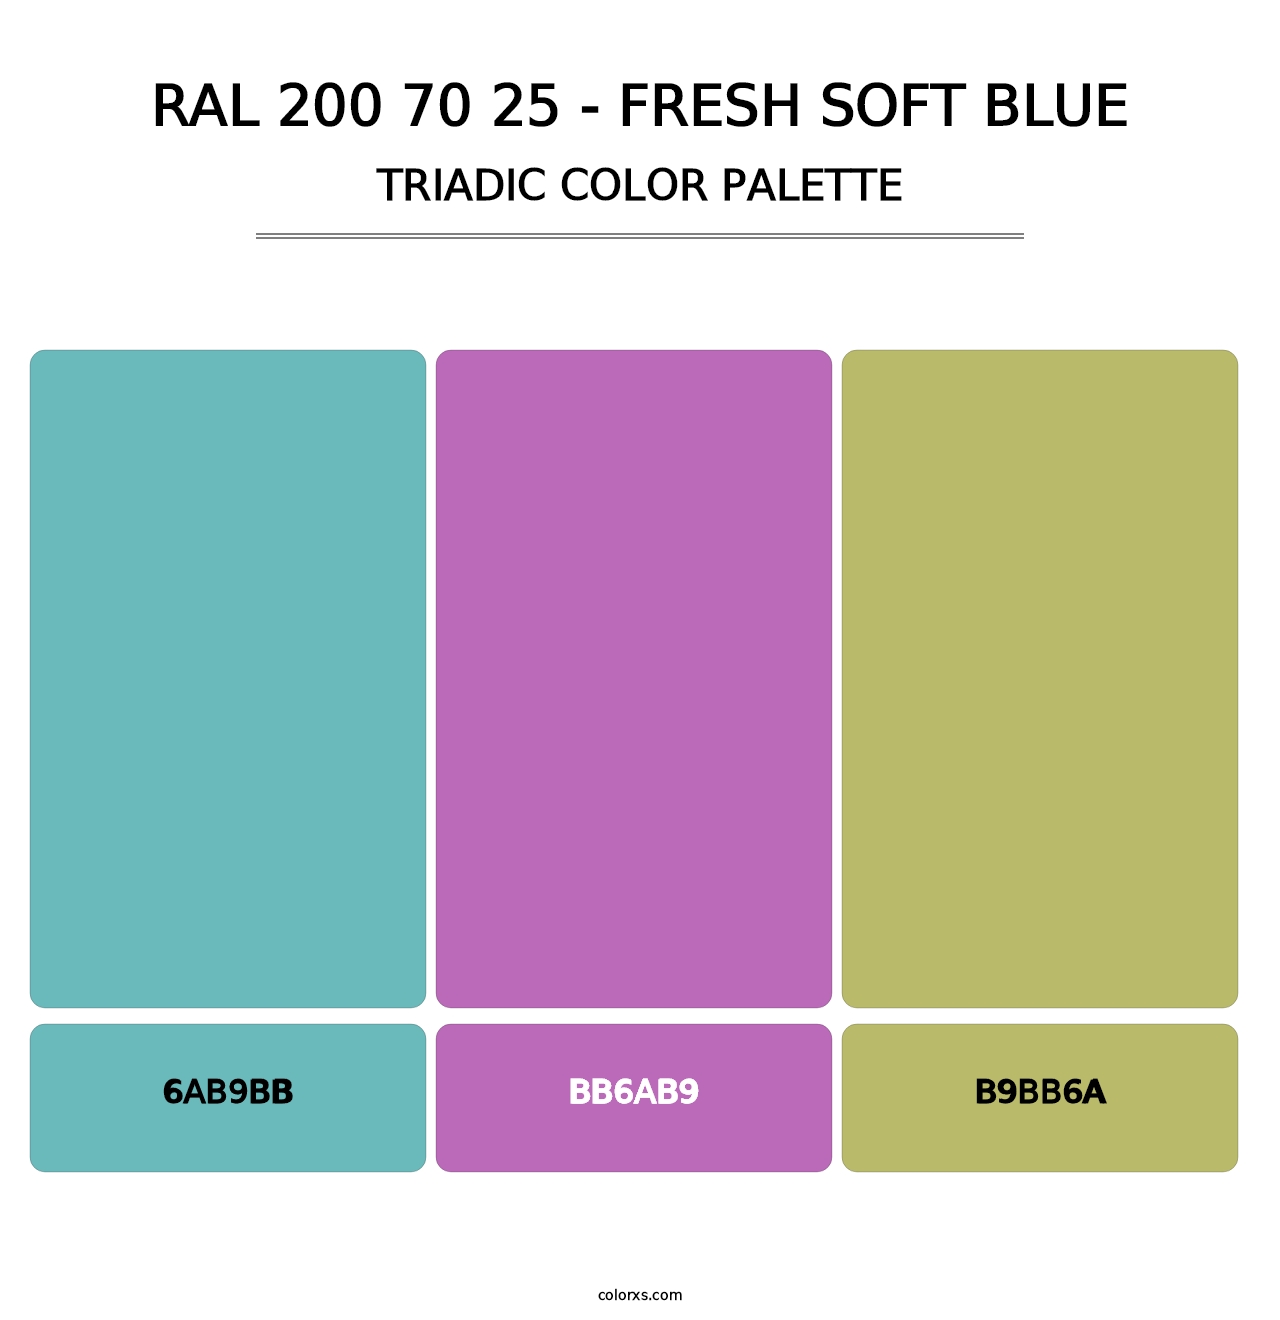 RAL 200 70 25 - Fresh Soft Blue - Triadic Color Palette